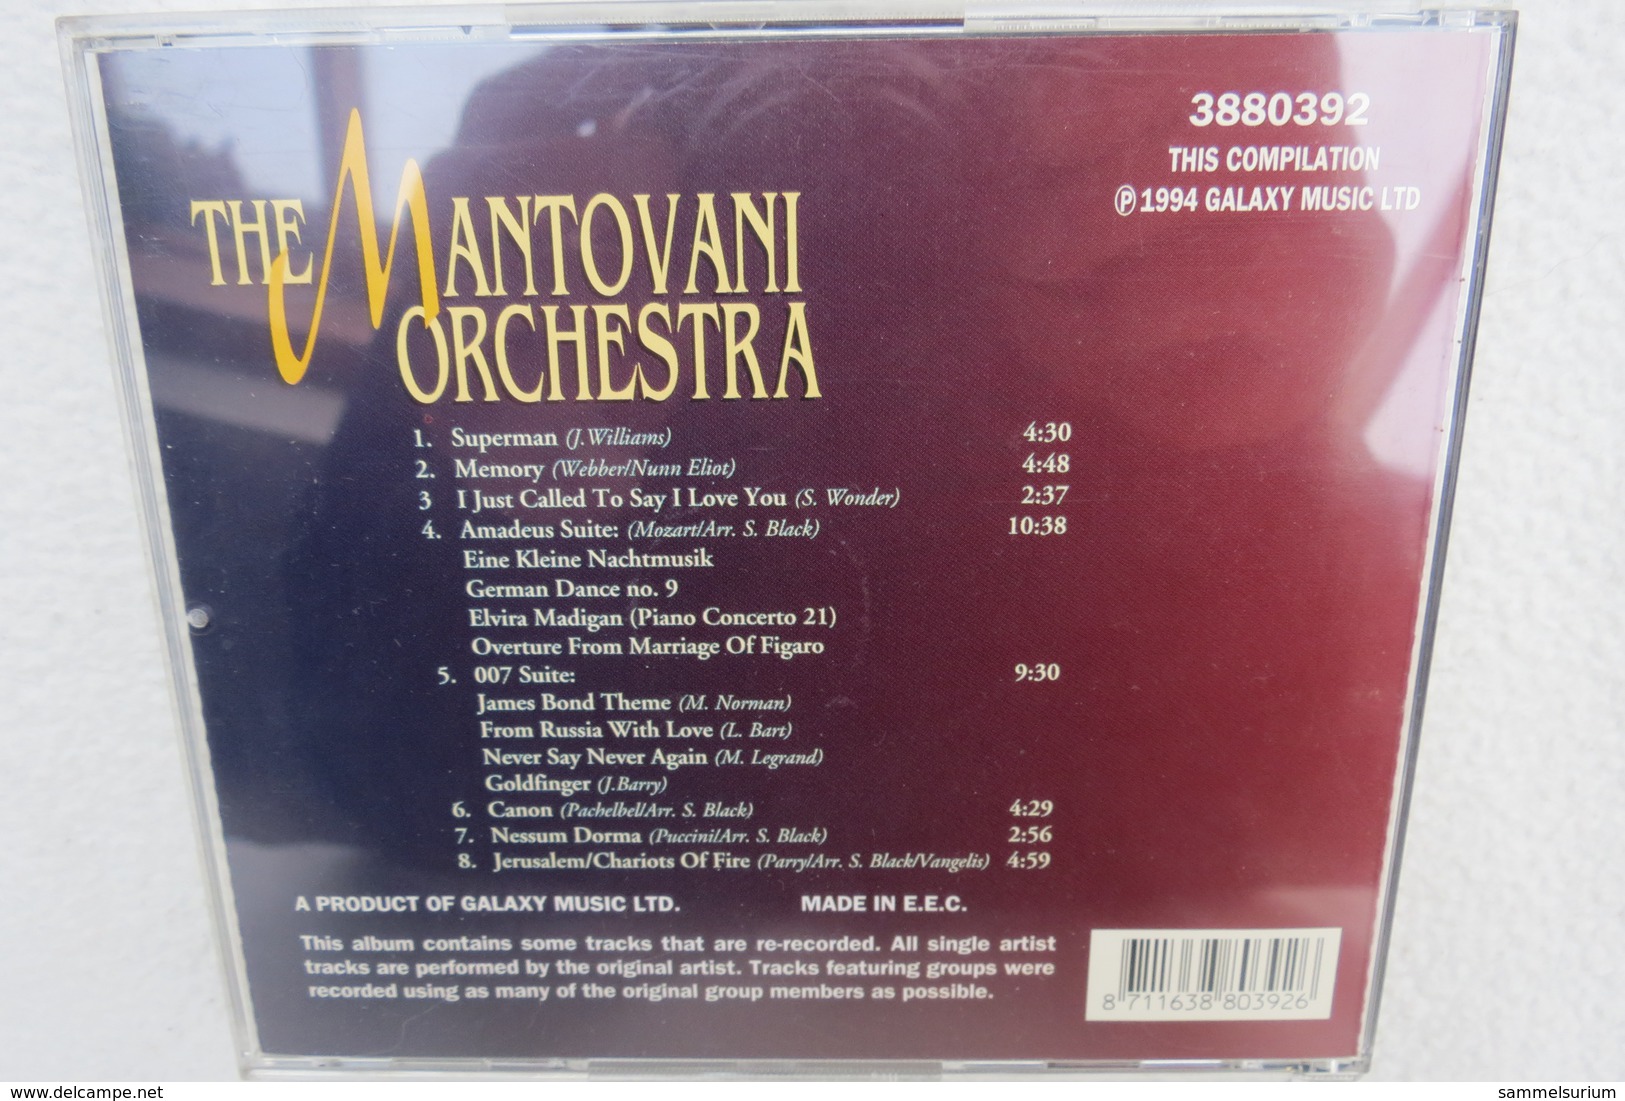 CD "The Mantovani Orchestra" The Incomparable Mantovani - Instrumental